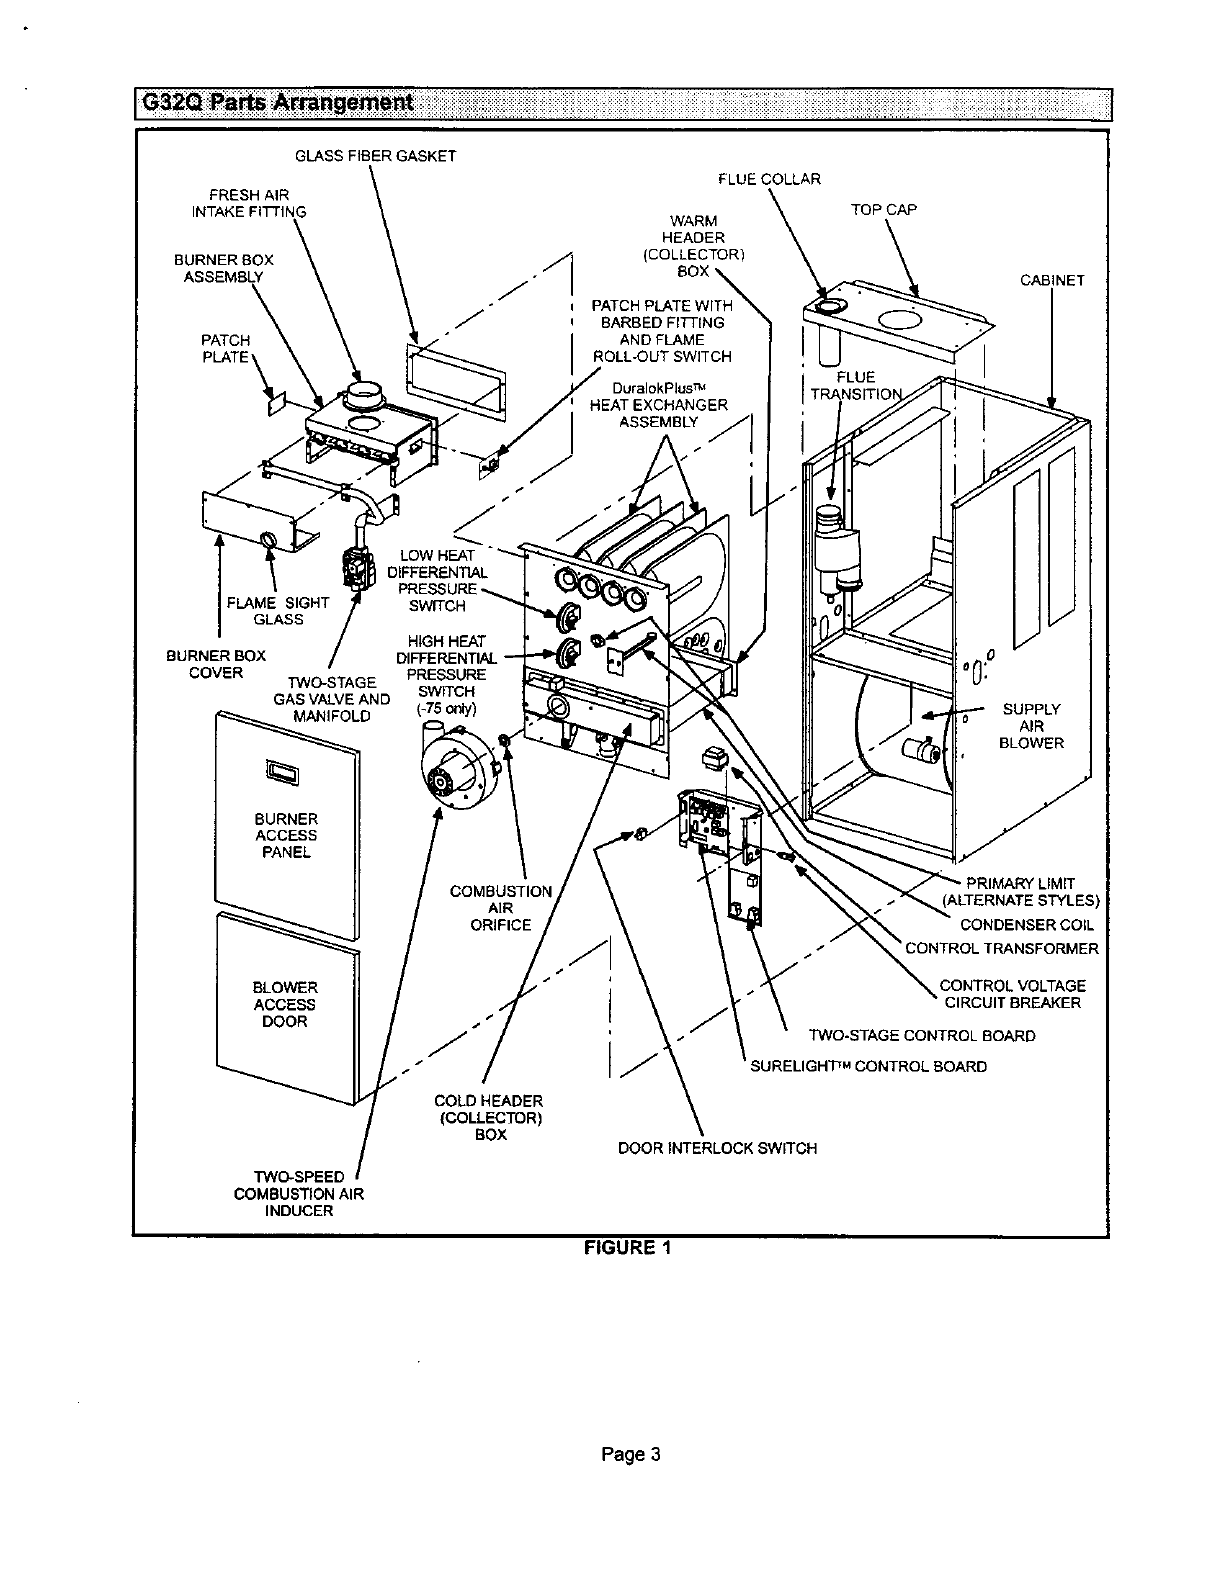 lennox furnace parts manual